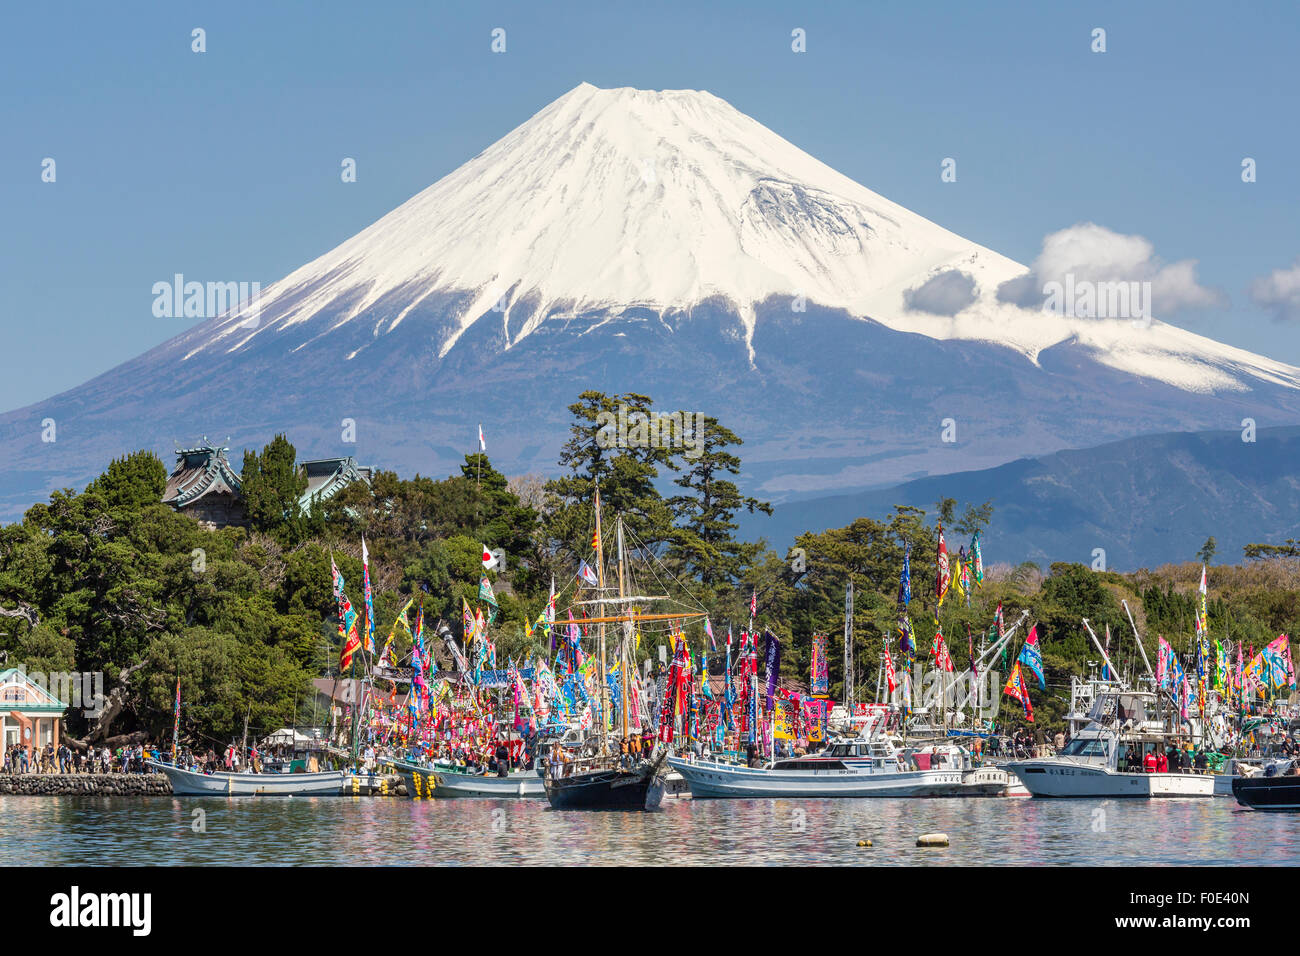 Fish boat and Mt. Fuji in Japan Stock Photo